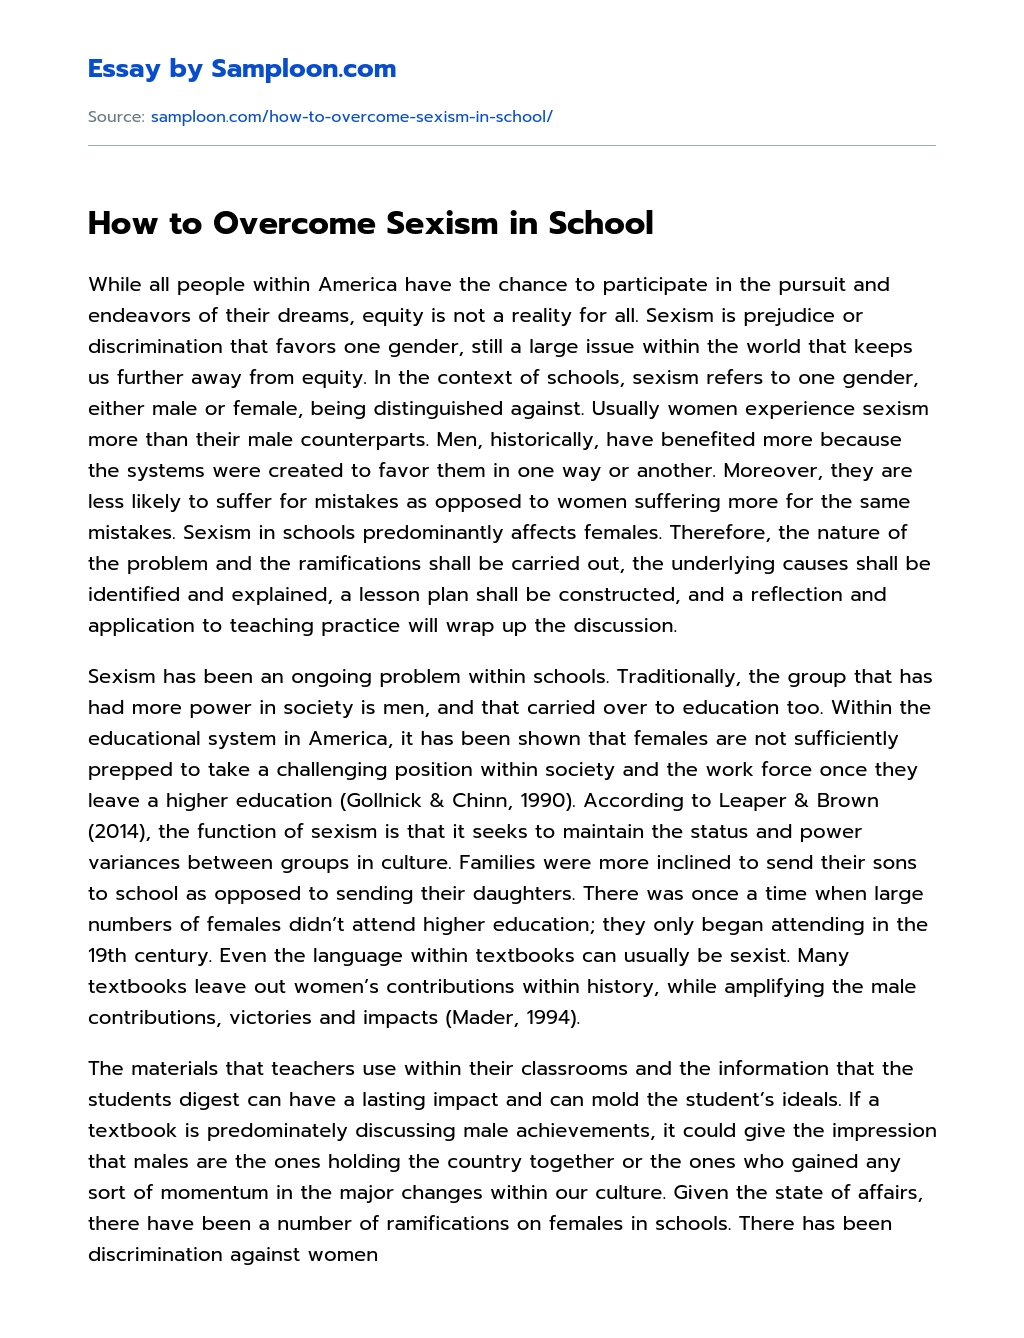 How to Overcome Sexism in School essay